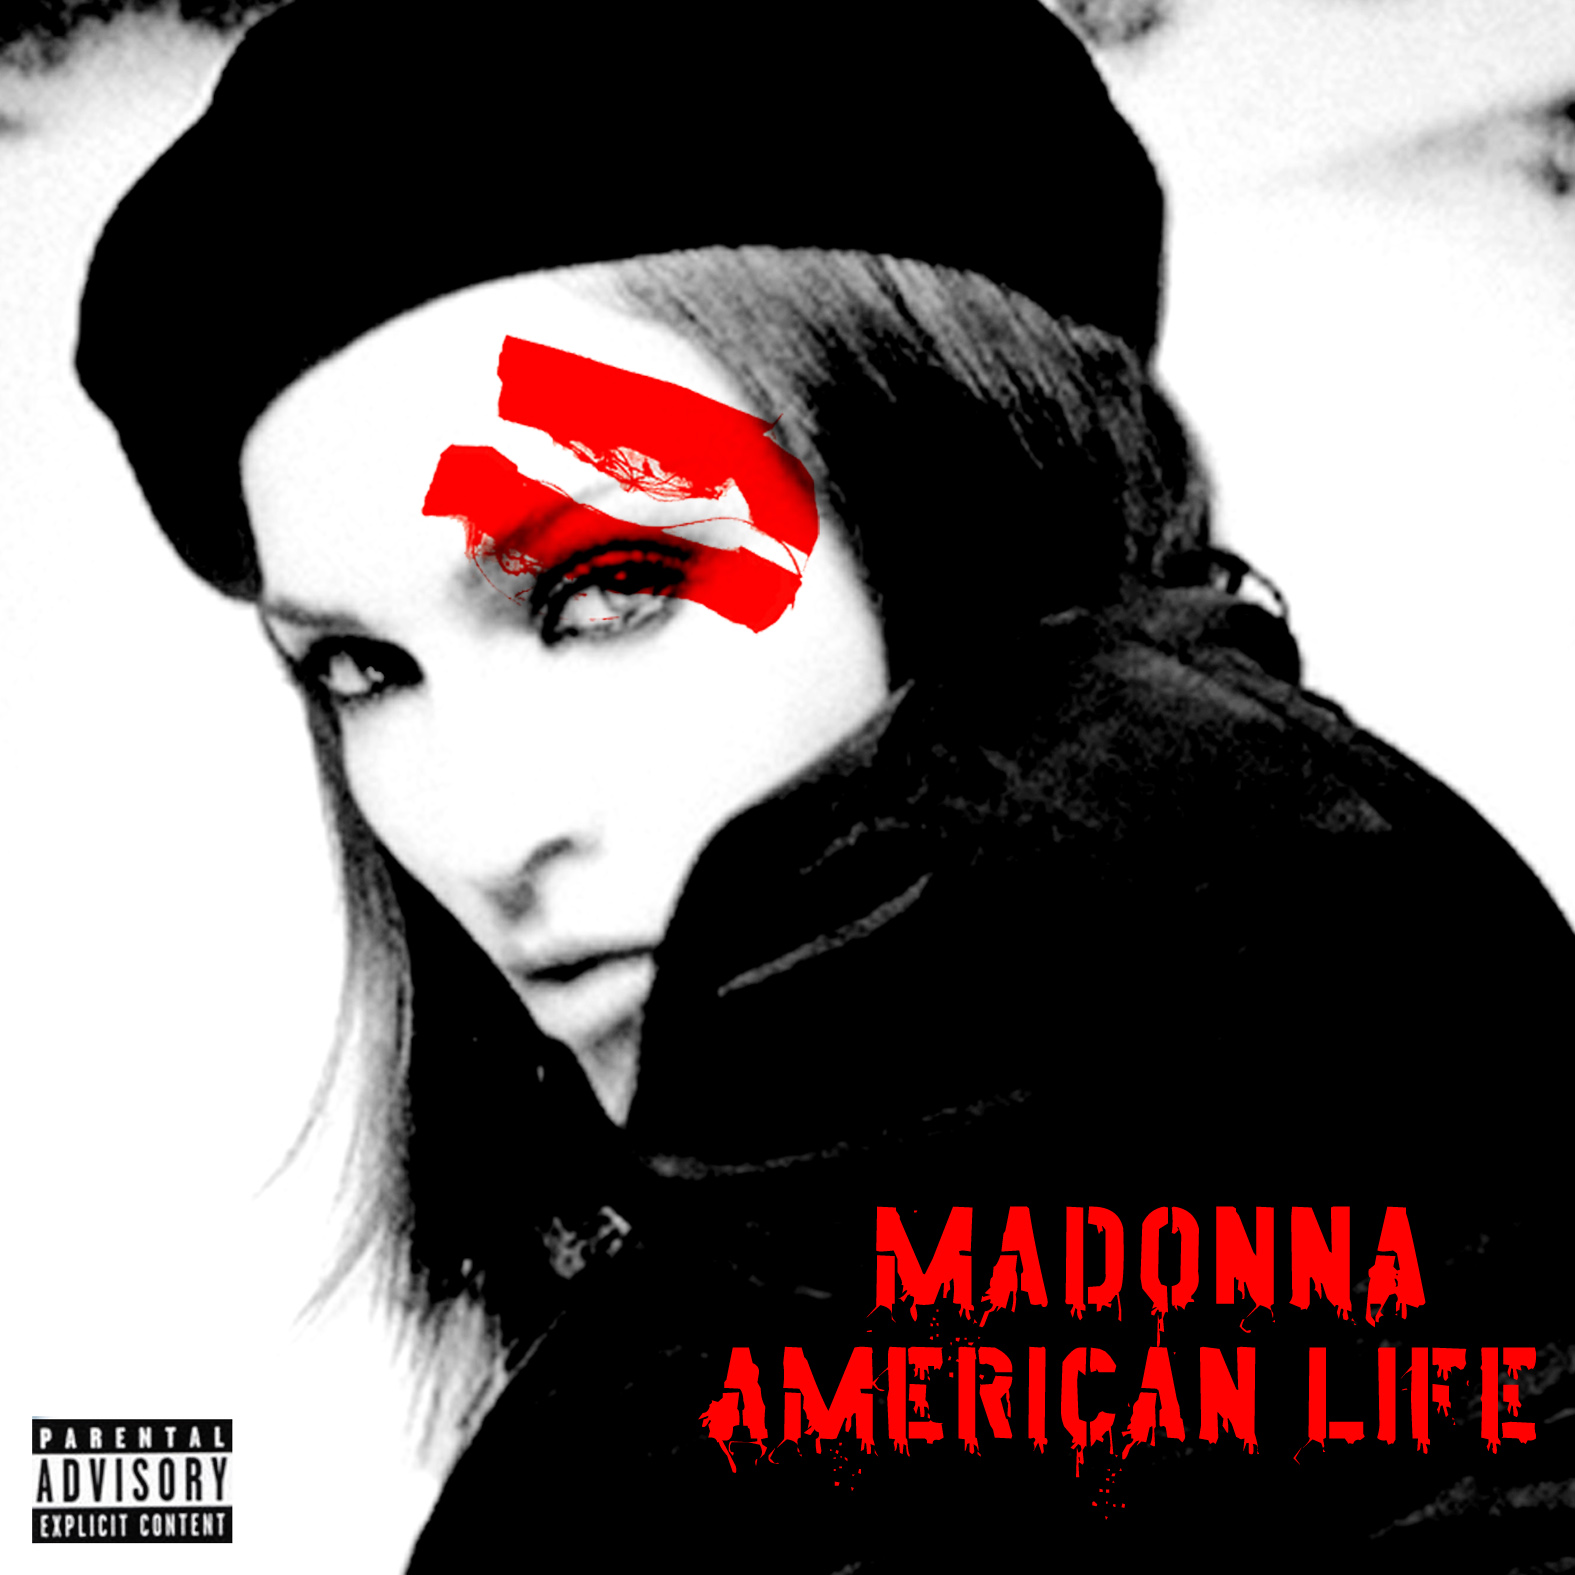 Жила mp3 без регистрации. Madonna 2003 American Life. American Life Мадонна. Мадонна обложки альбомов. Madonna обложки альбомов.